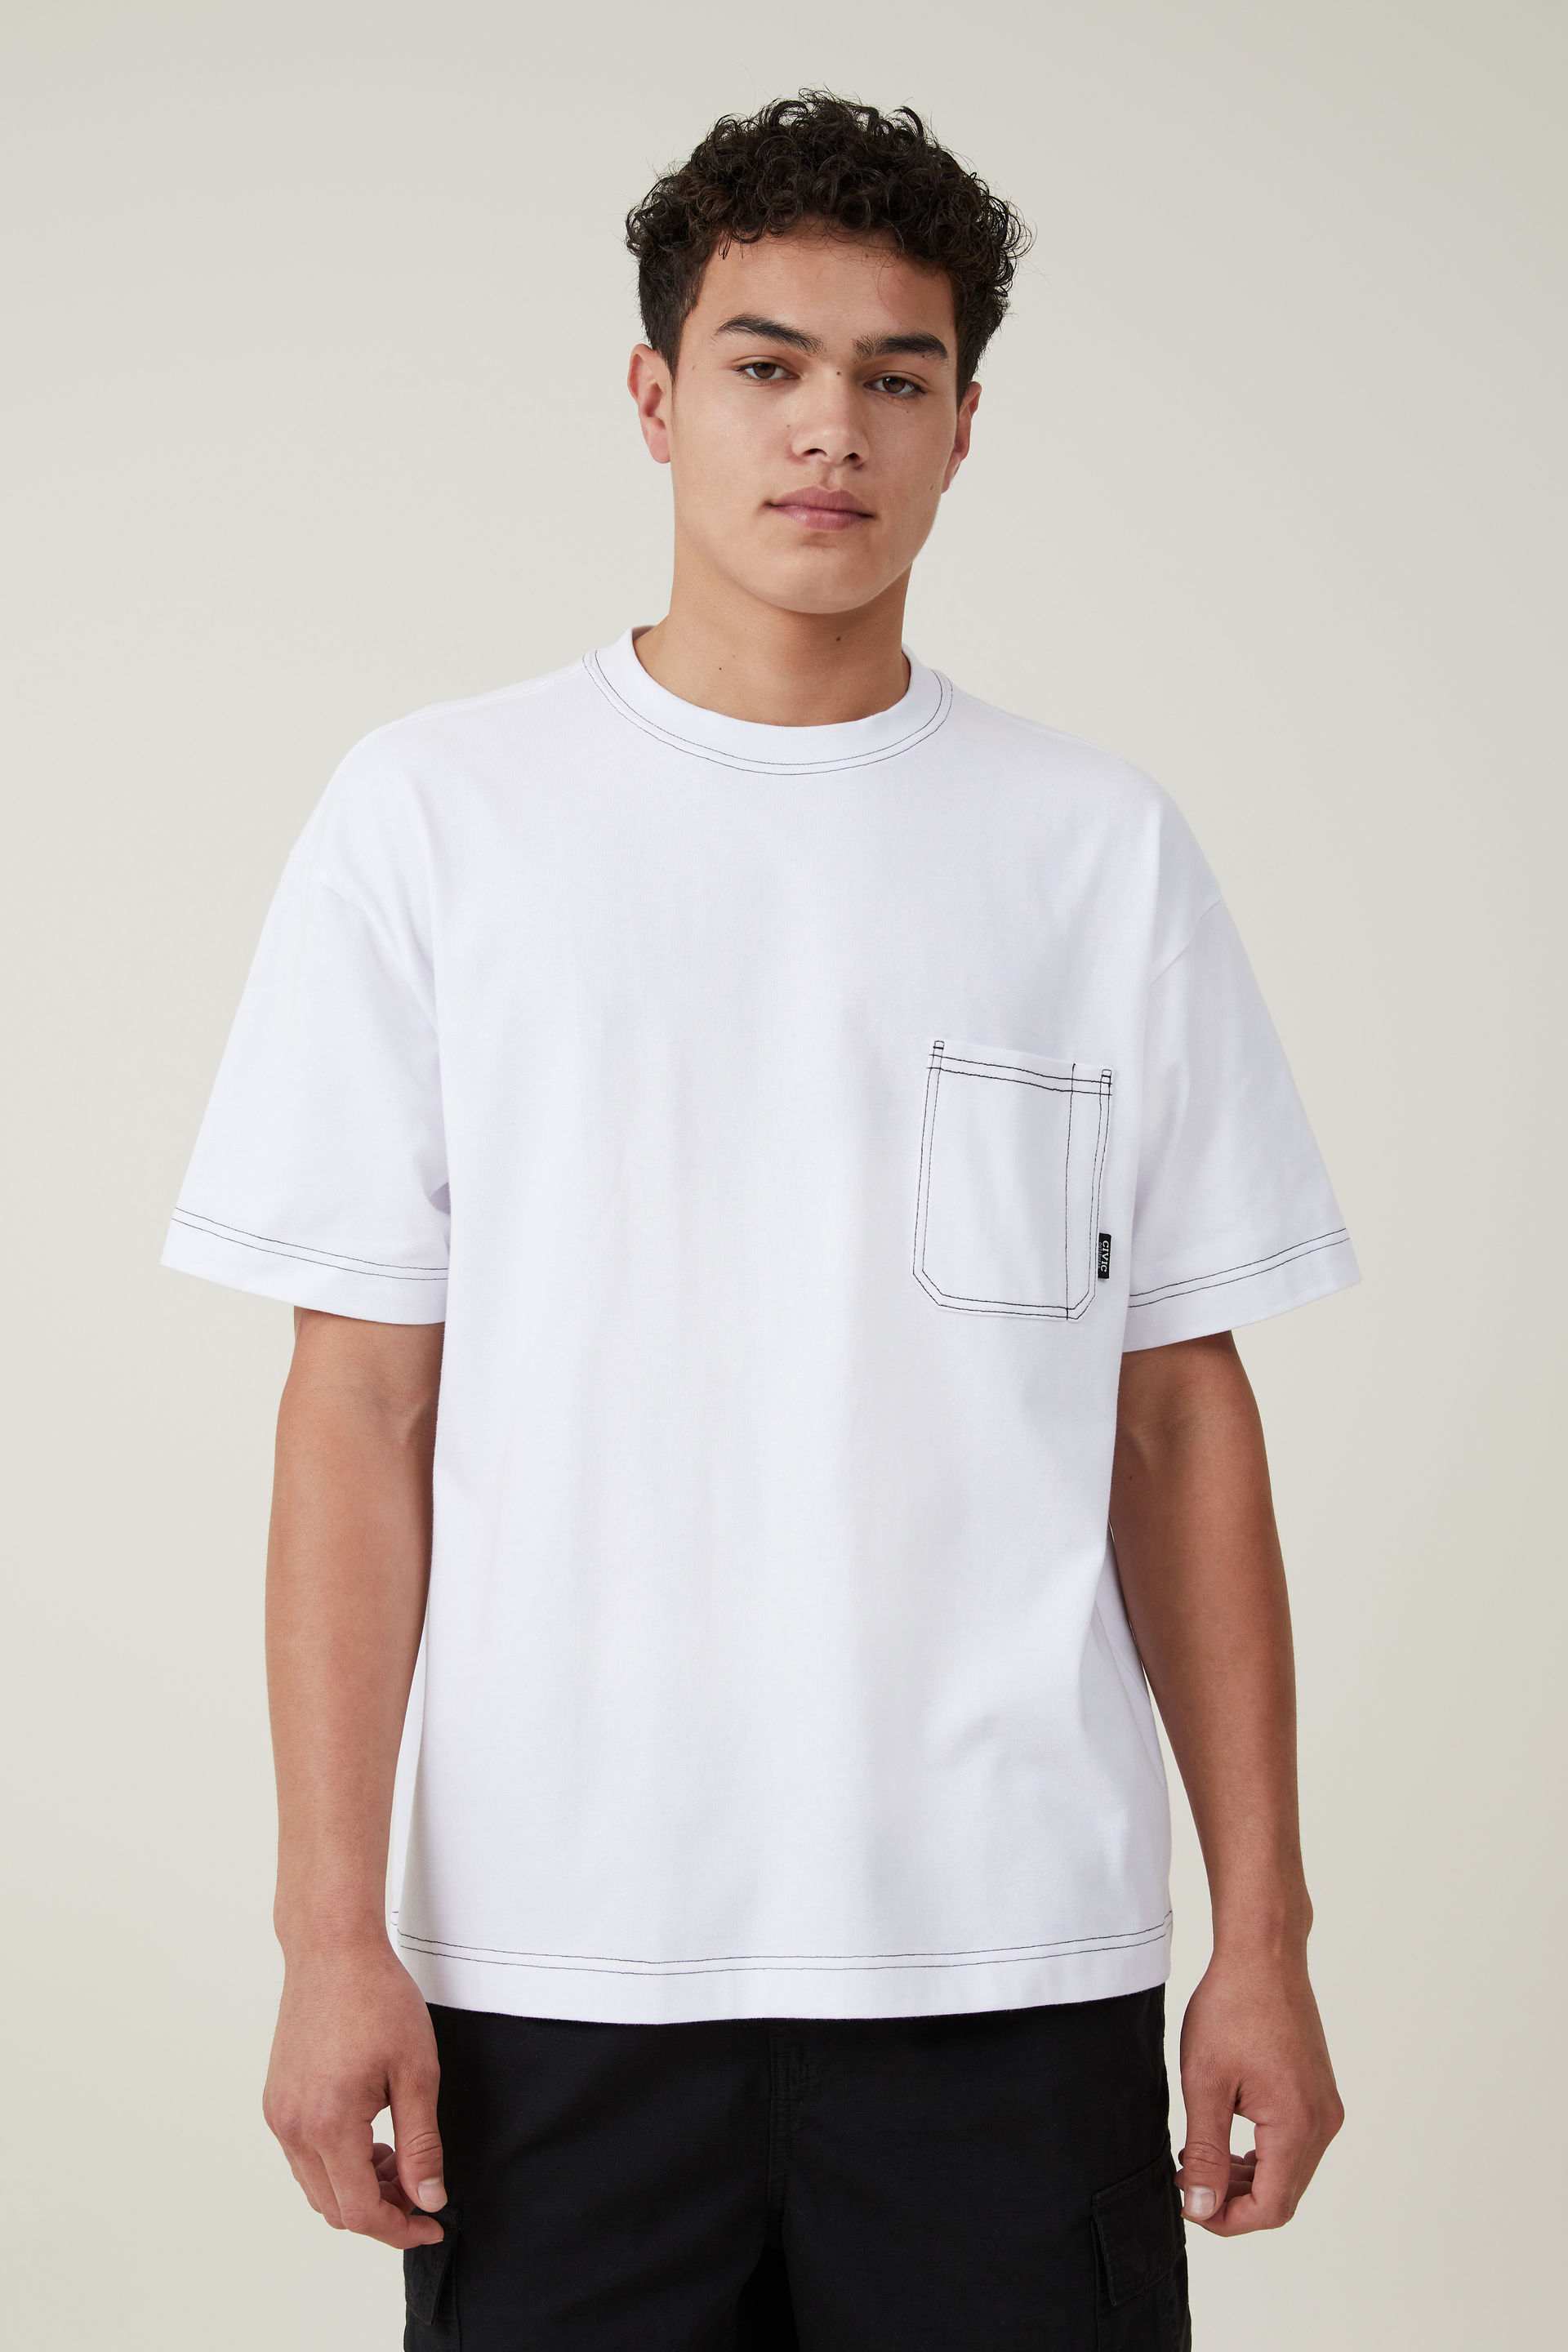 Cotton On Men - Box Fit Pocket T-Shirt - White / civic contrast